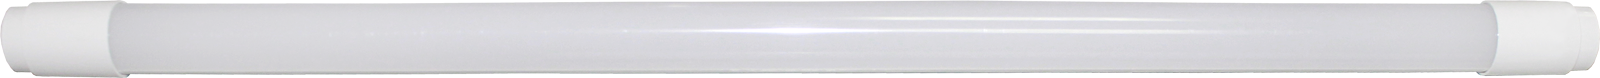 SKATLED-12DC-6W-90A610 Аварийное освещение фото, изображение